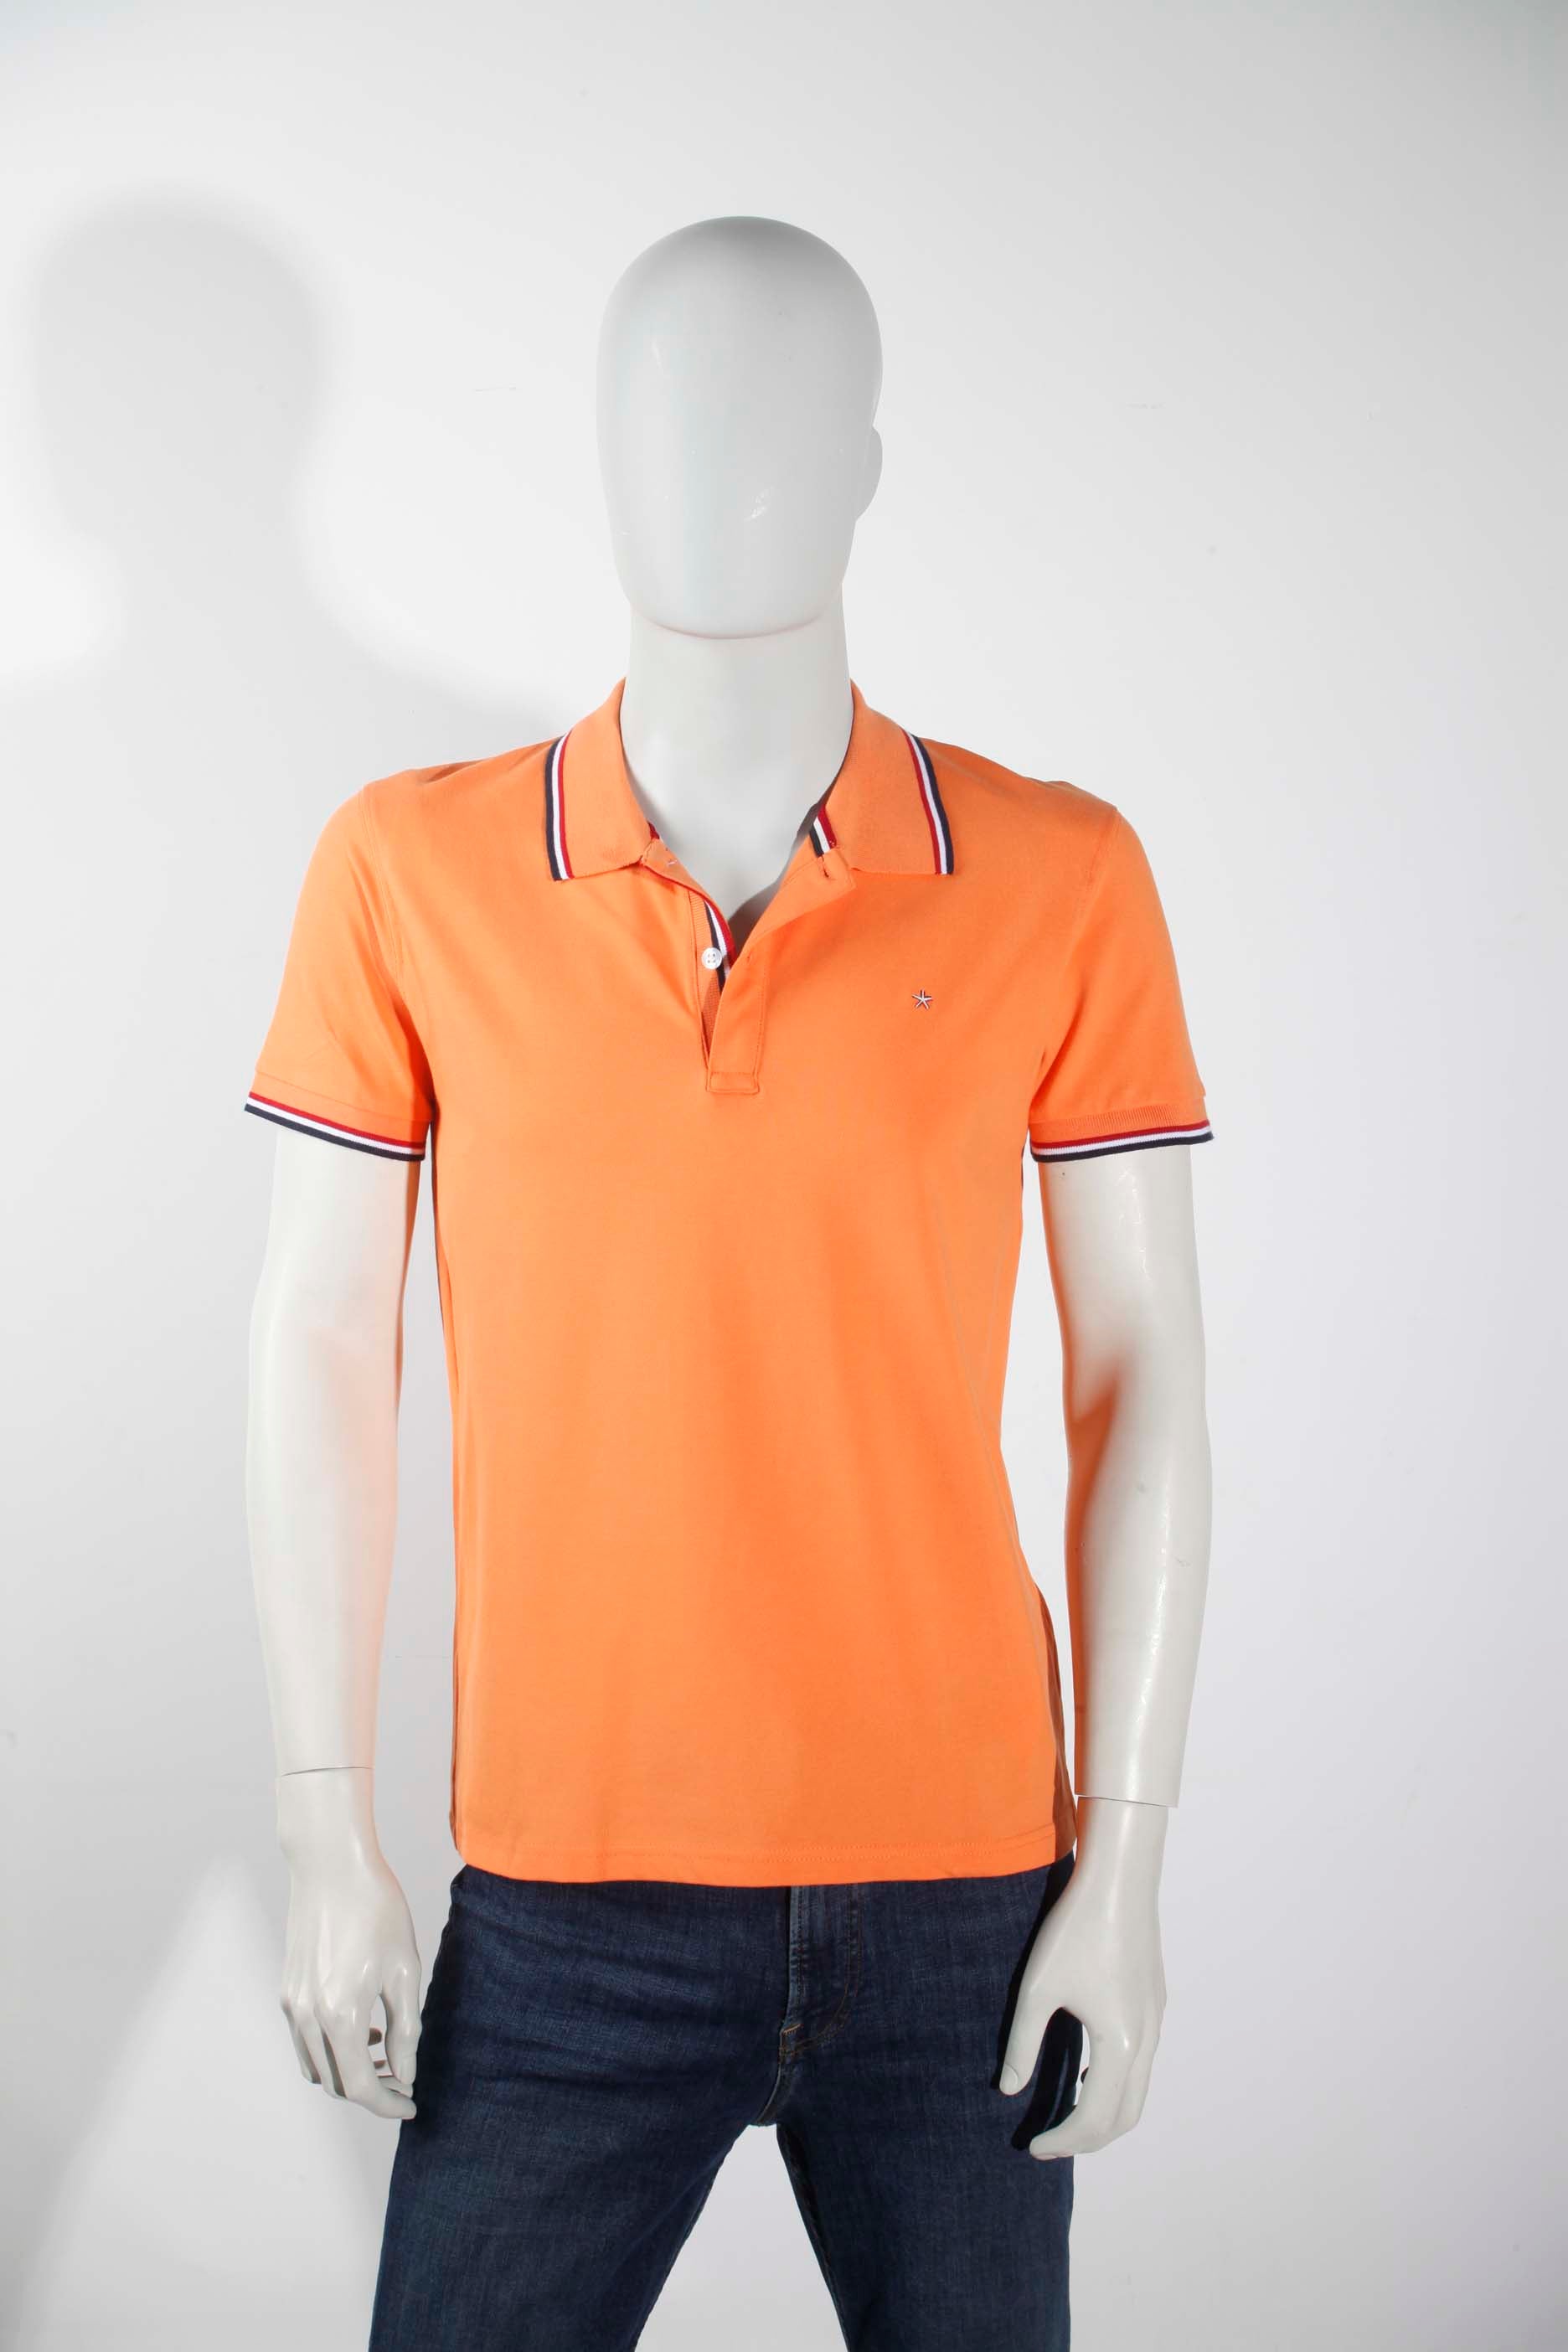 Mens Bright Orange Polo Shirt (Medium)